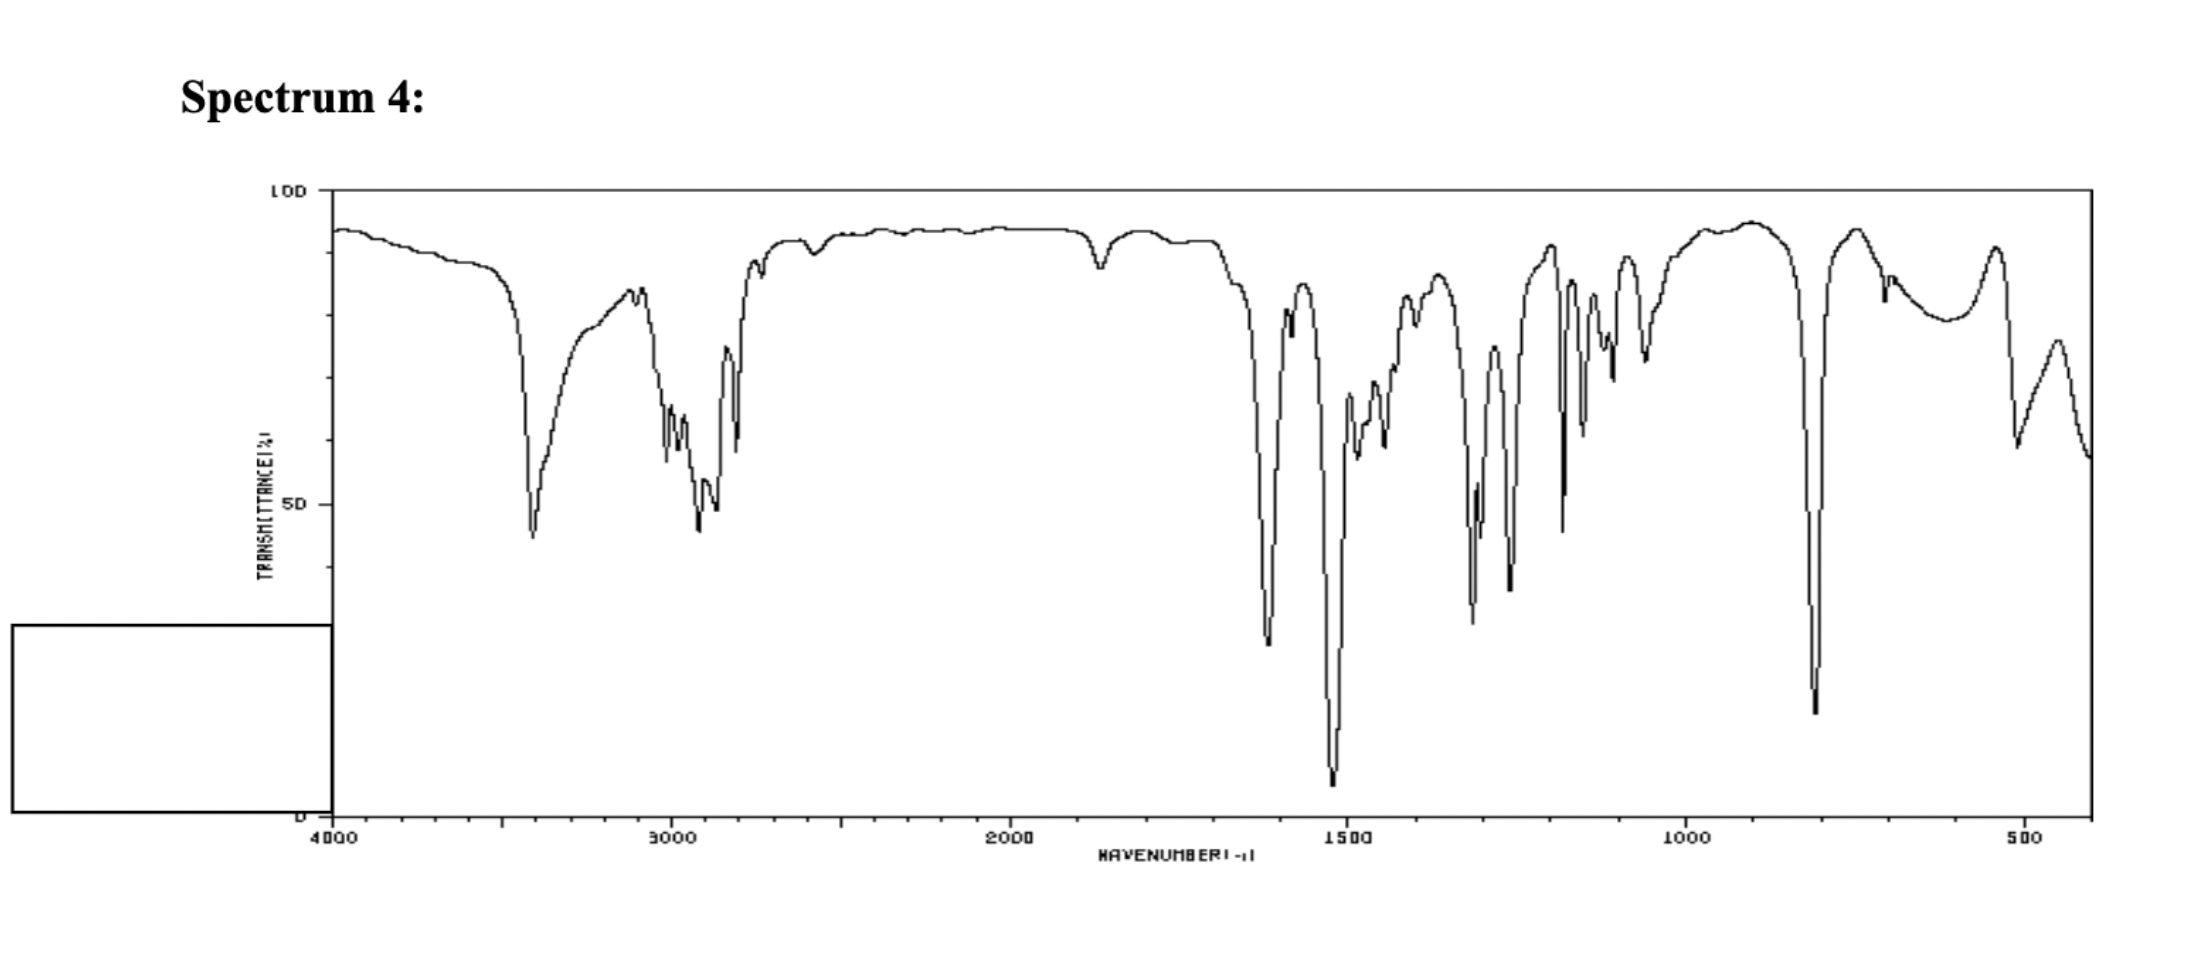 Spectrum 4: LOD TRANSMETTANCE121 5D rom 4000 3000 2000 ISOD 1000 500 HAVENUMBERI -11 